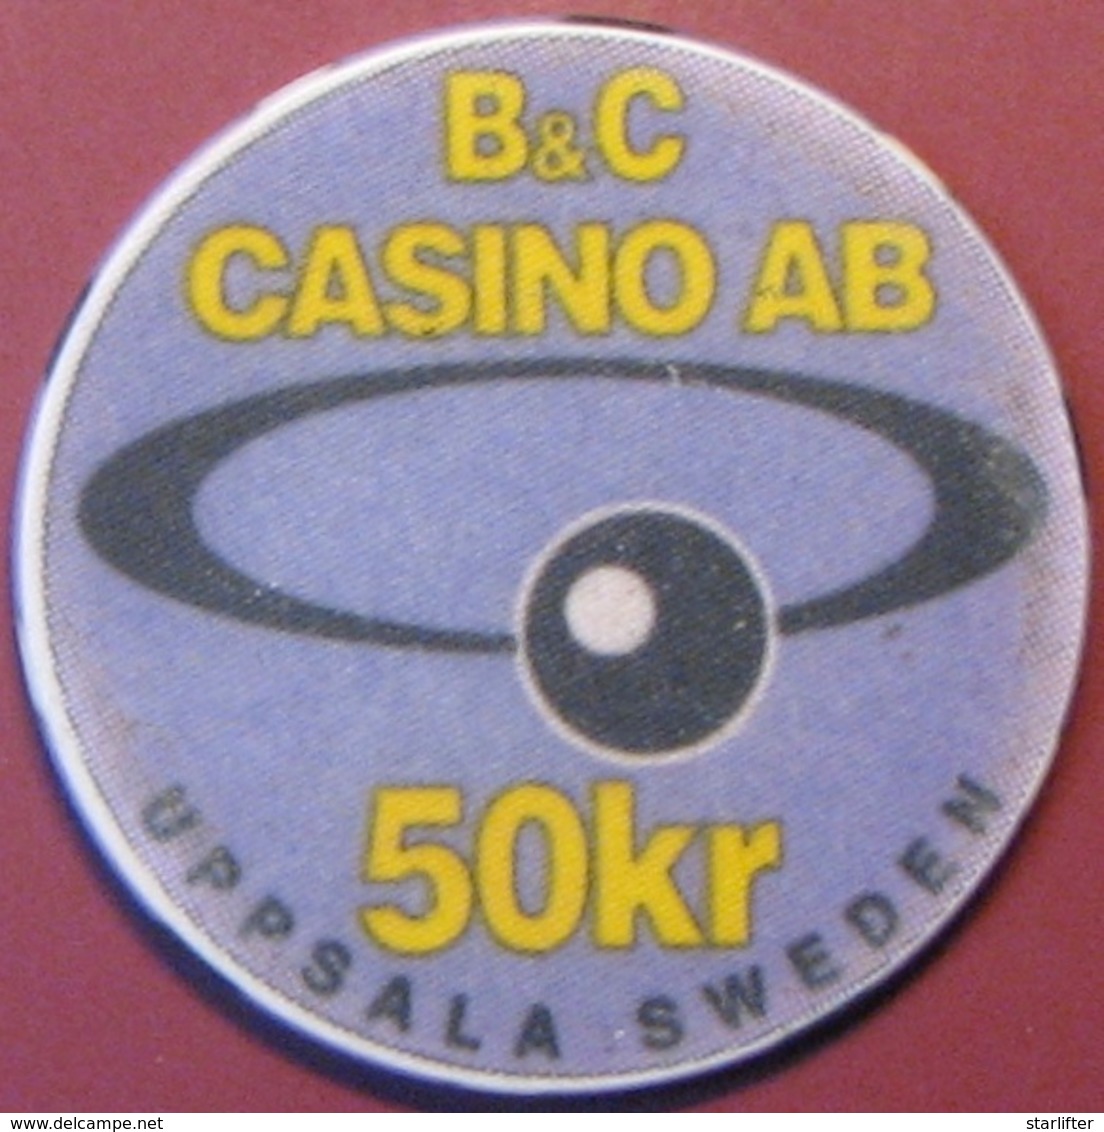 50Kr Casino Chip. Casino AB, Uppsala, Sweden. G81. - Casino